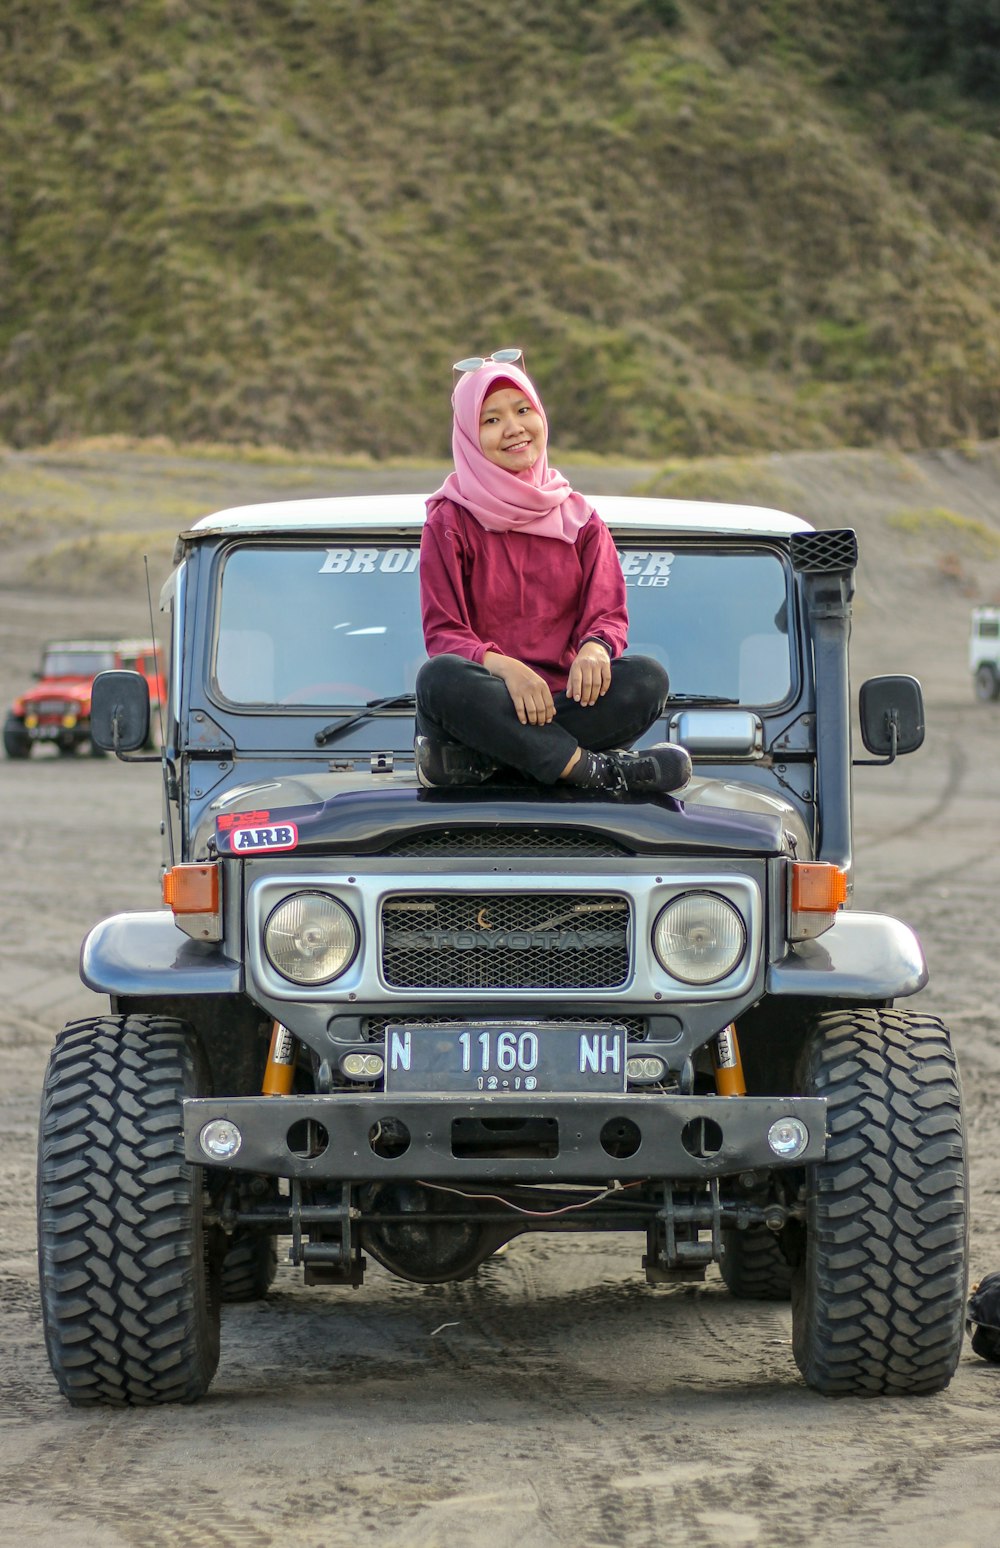 women's pink hijab sitting on white vehicle close-up photography